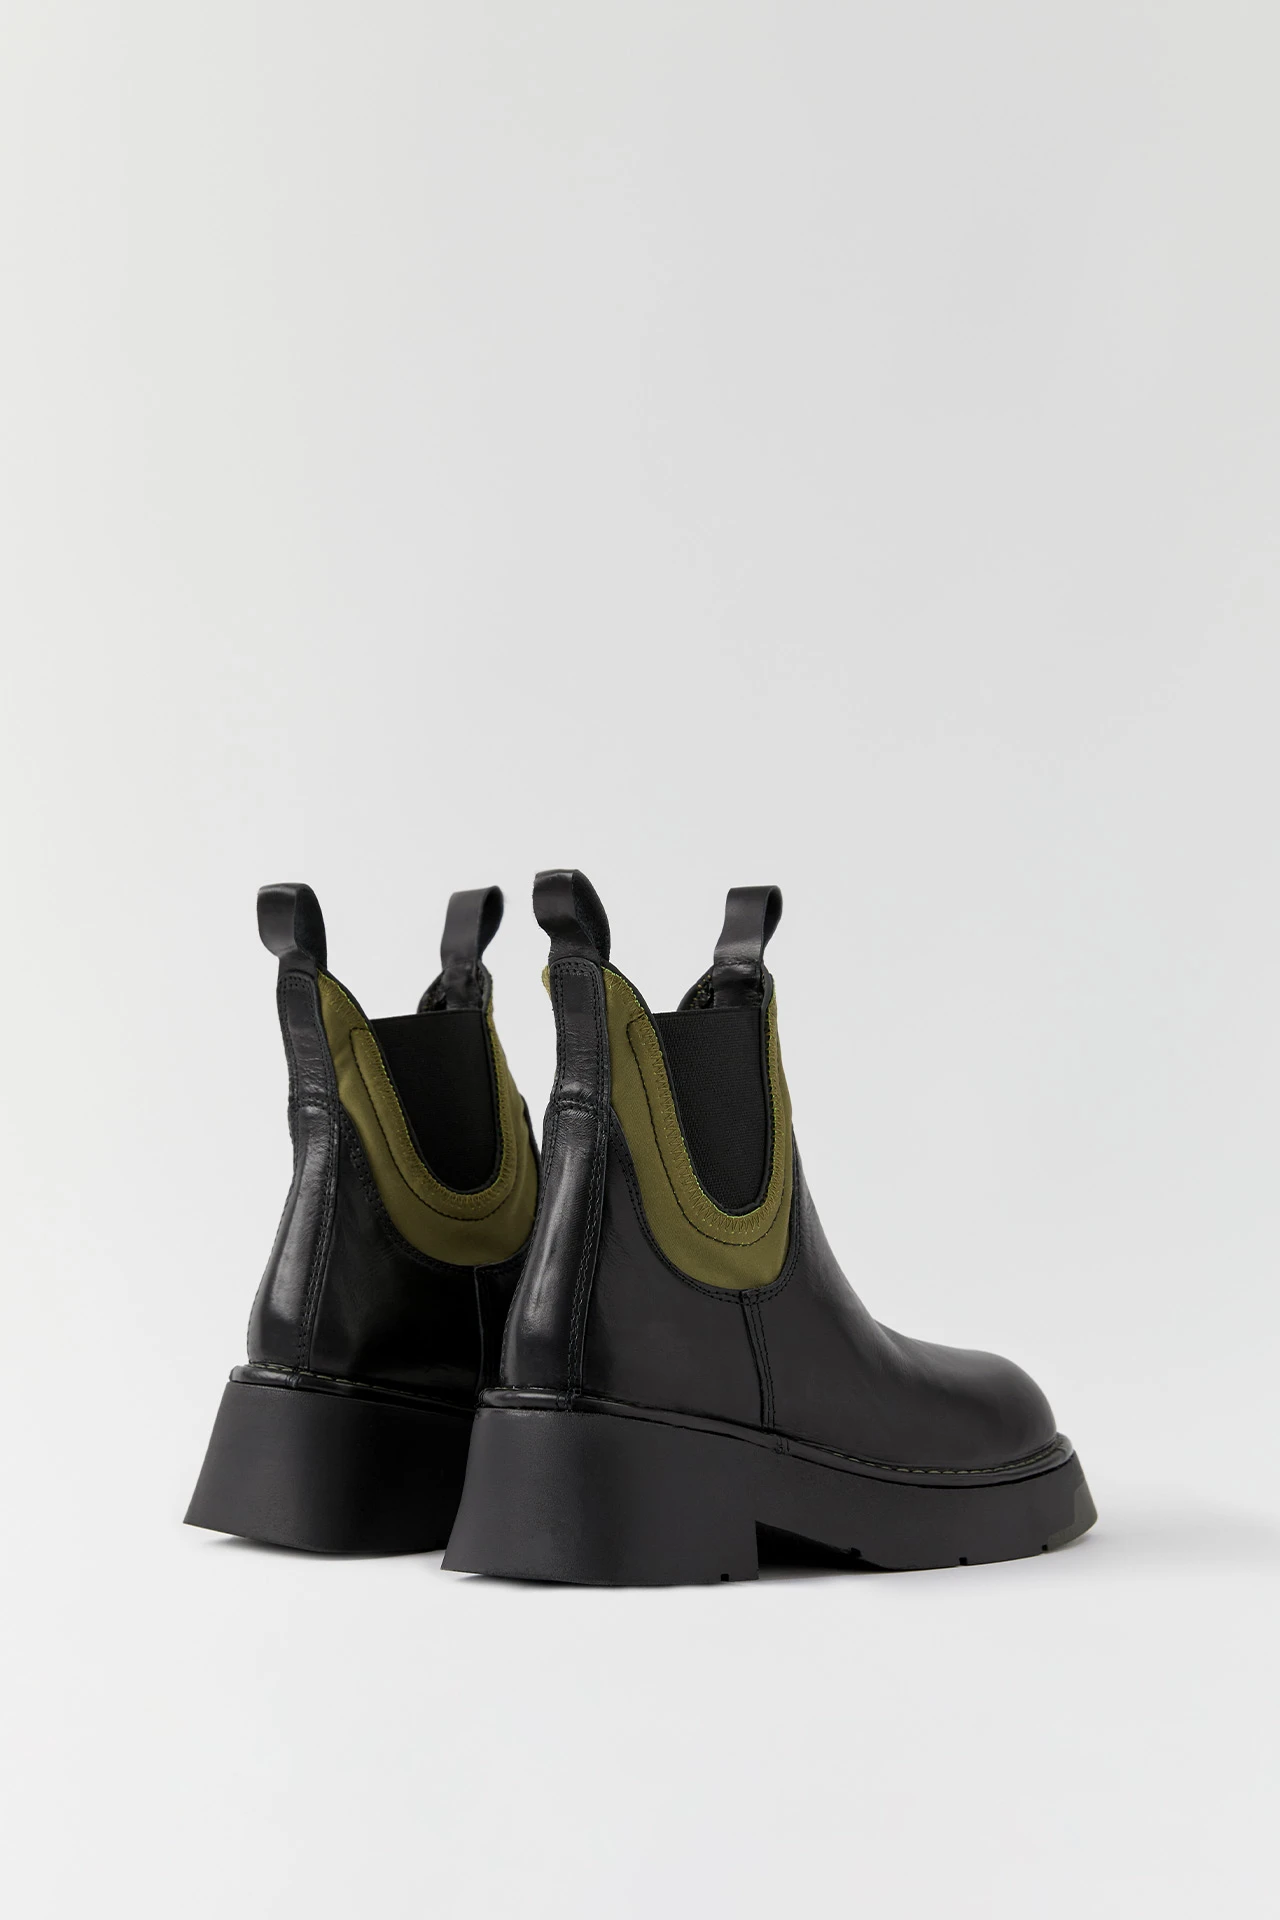 miista-kaya-black-ankle-boots-02